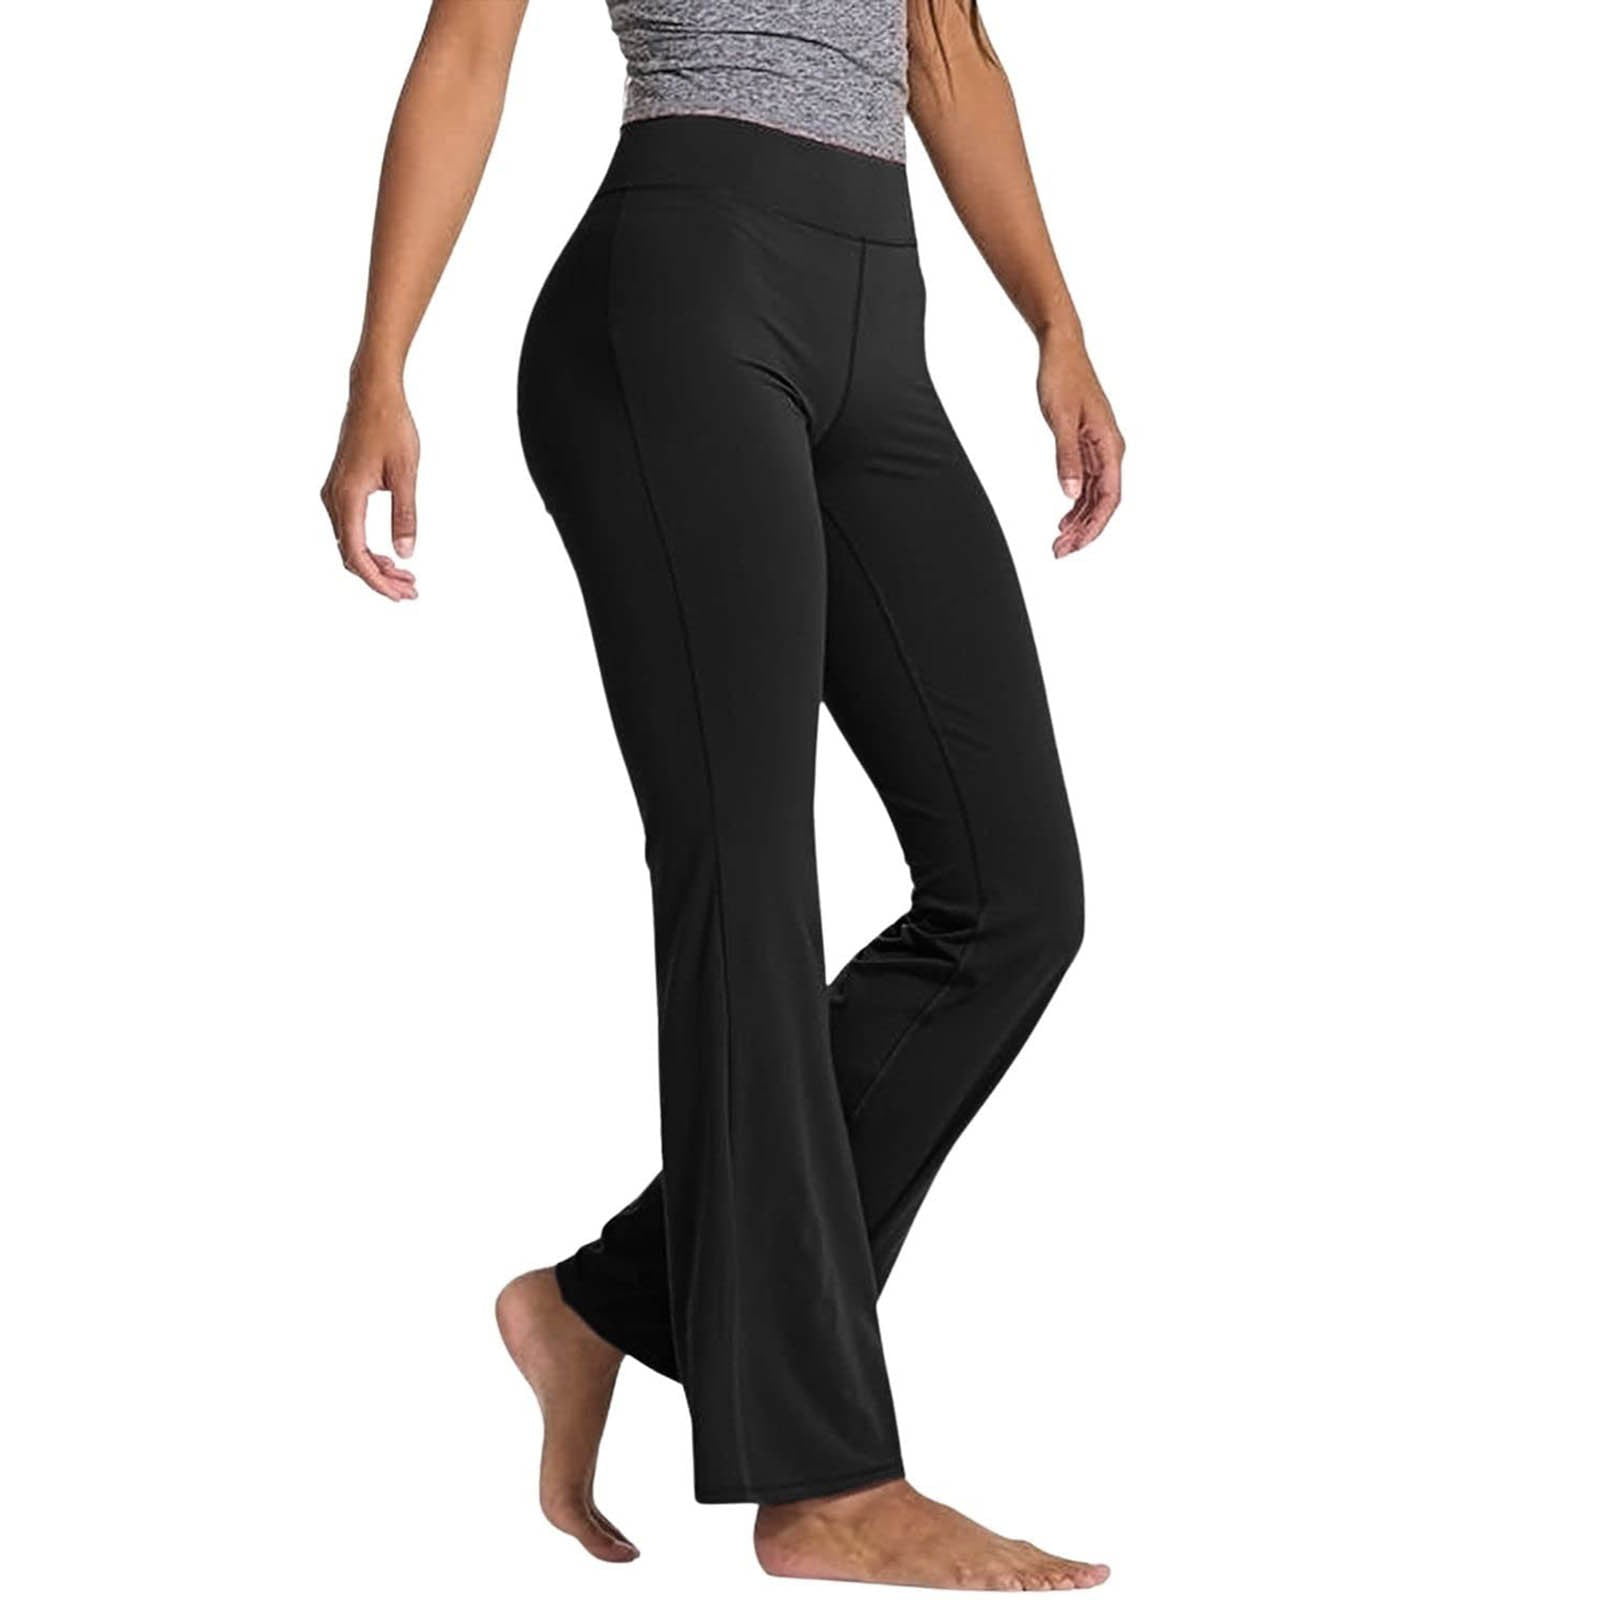 HBFAGFB Women Casual Pants Ribbed Seamless Flare Leggings Bootcut High  Waist Yoga Pants Grey Size XL 